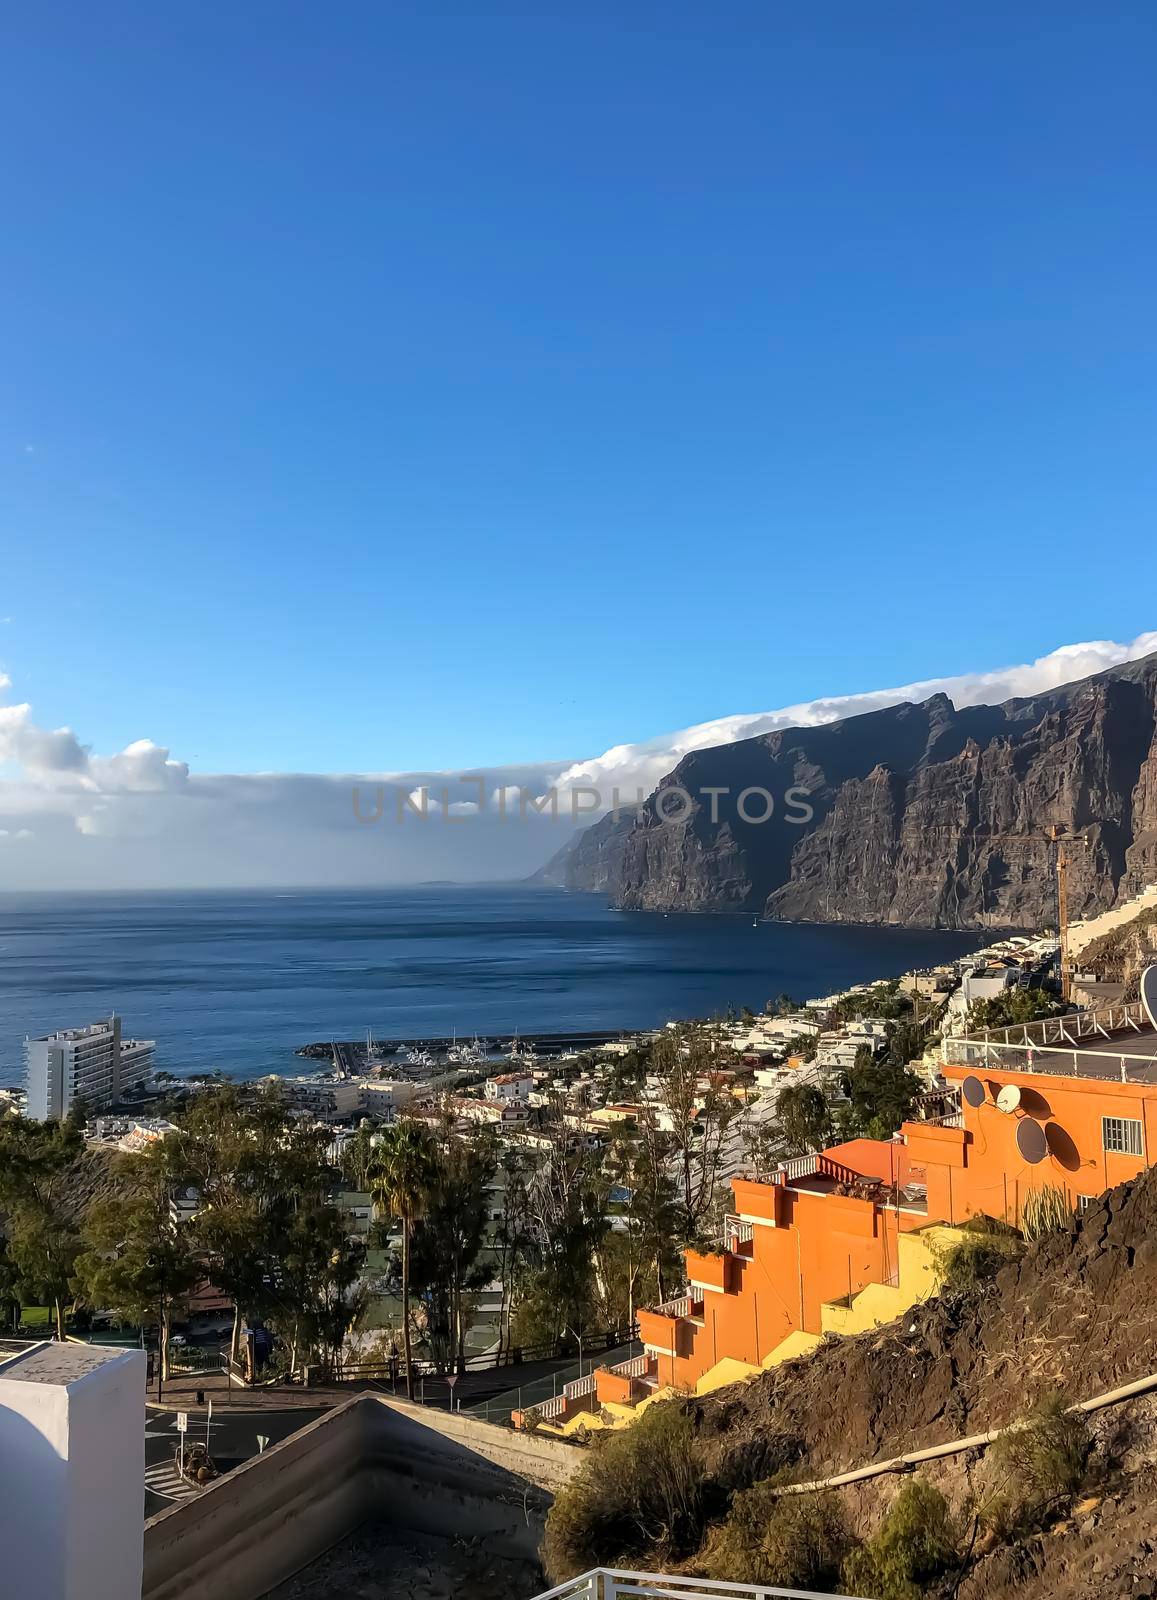 Giant mountains on Tenerife. High quality photo